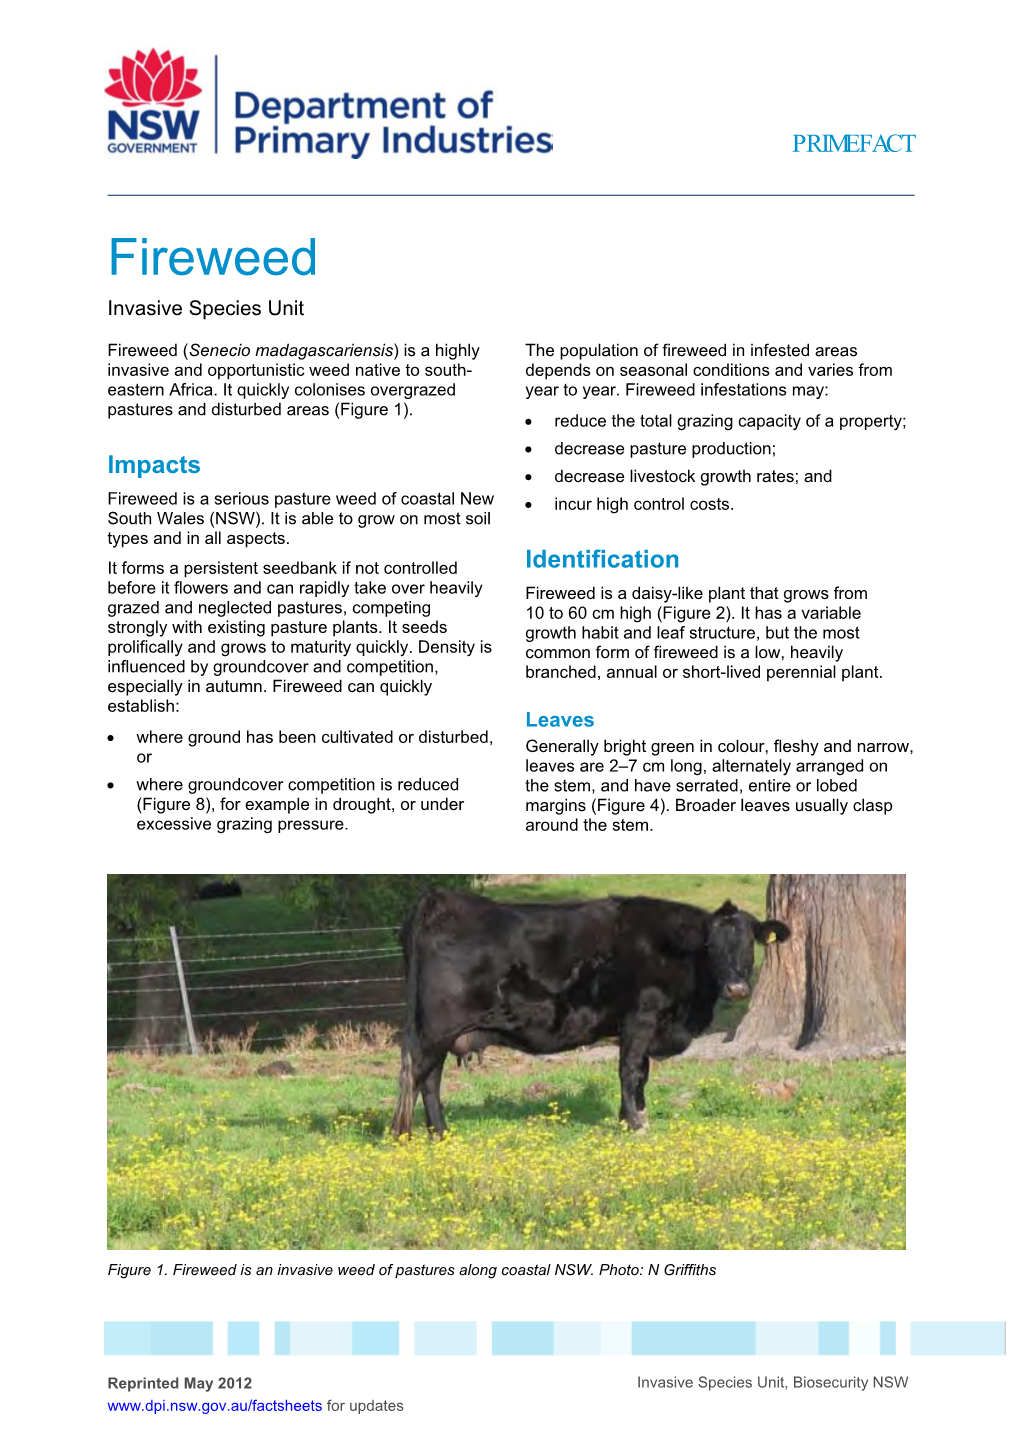 Fireweed Invasive Species Unit